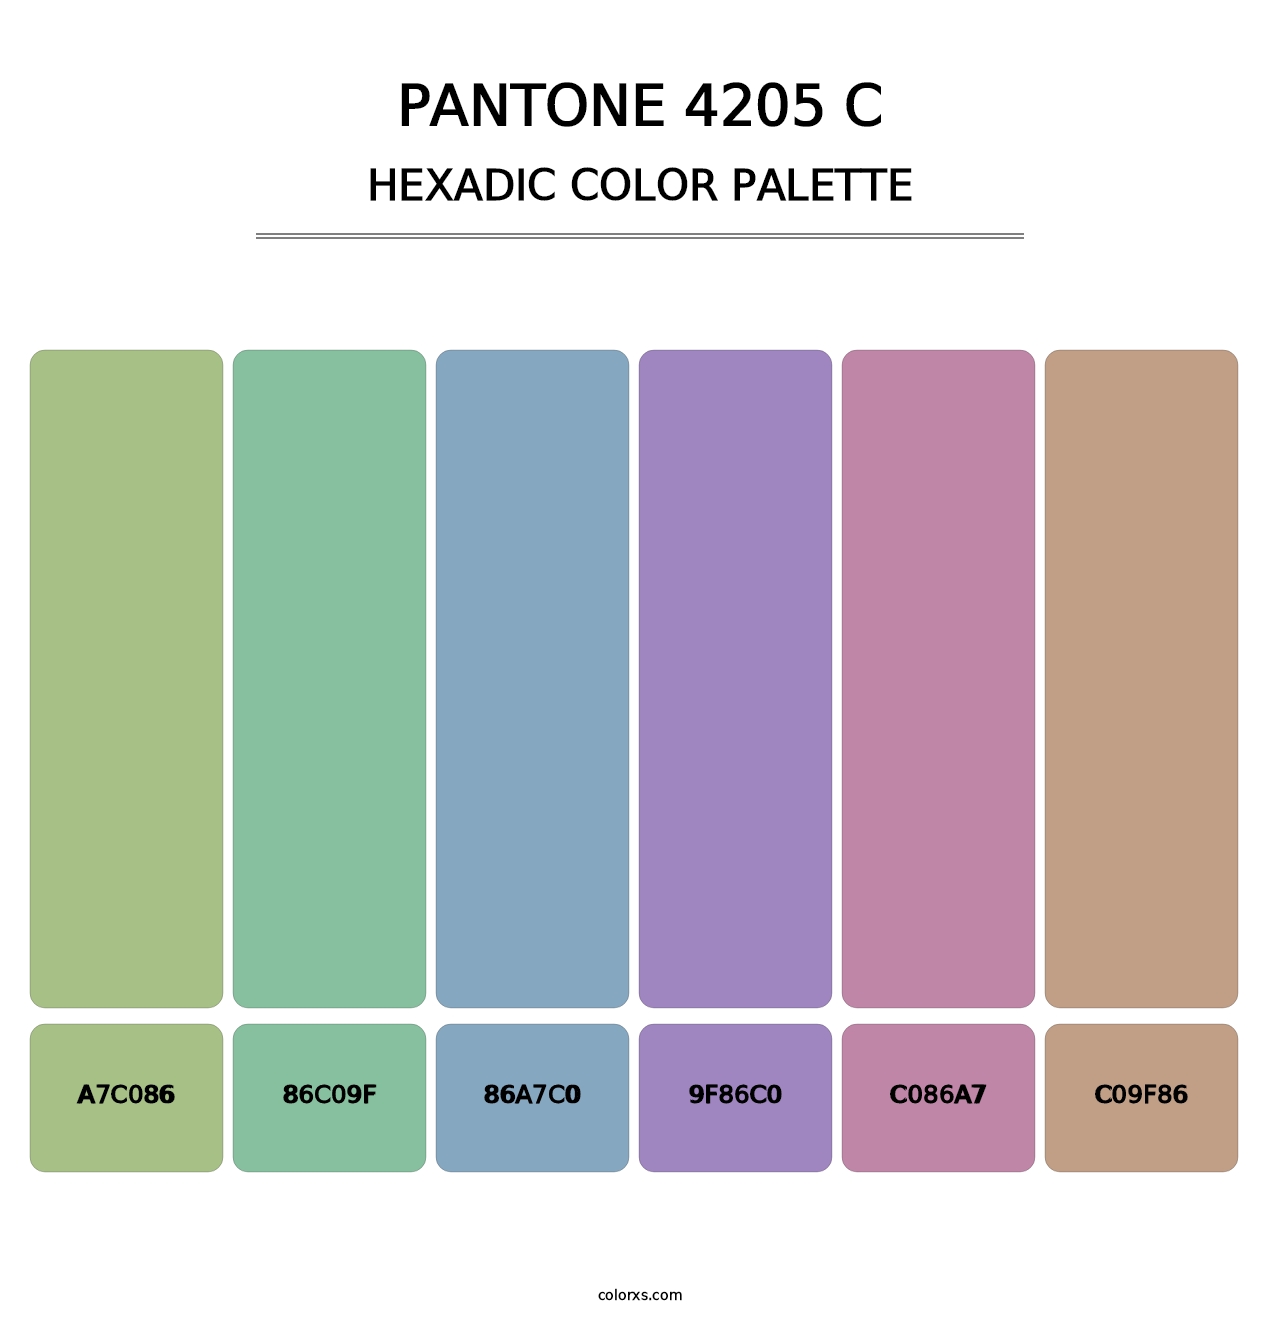 PANTONE 4205 C - Hexadic Color Palette